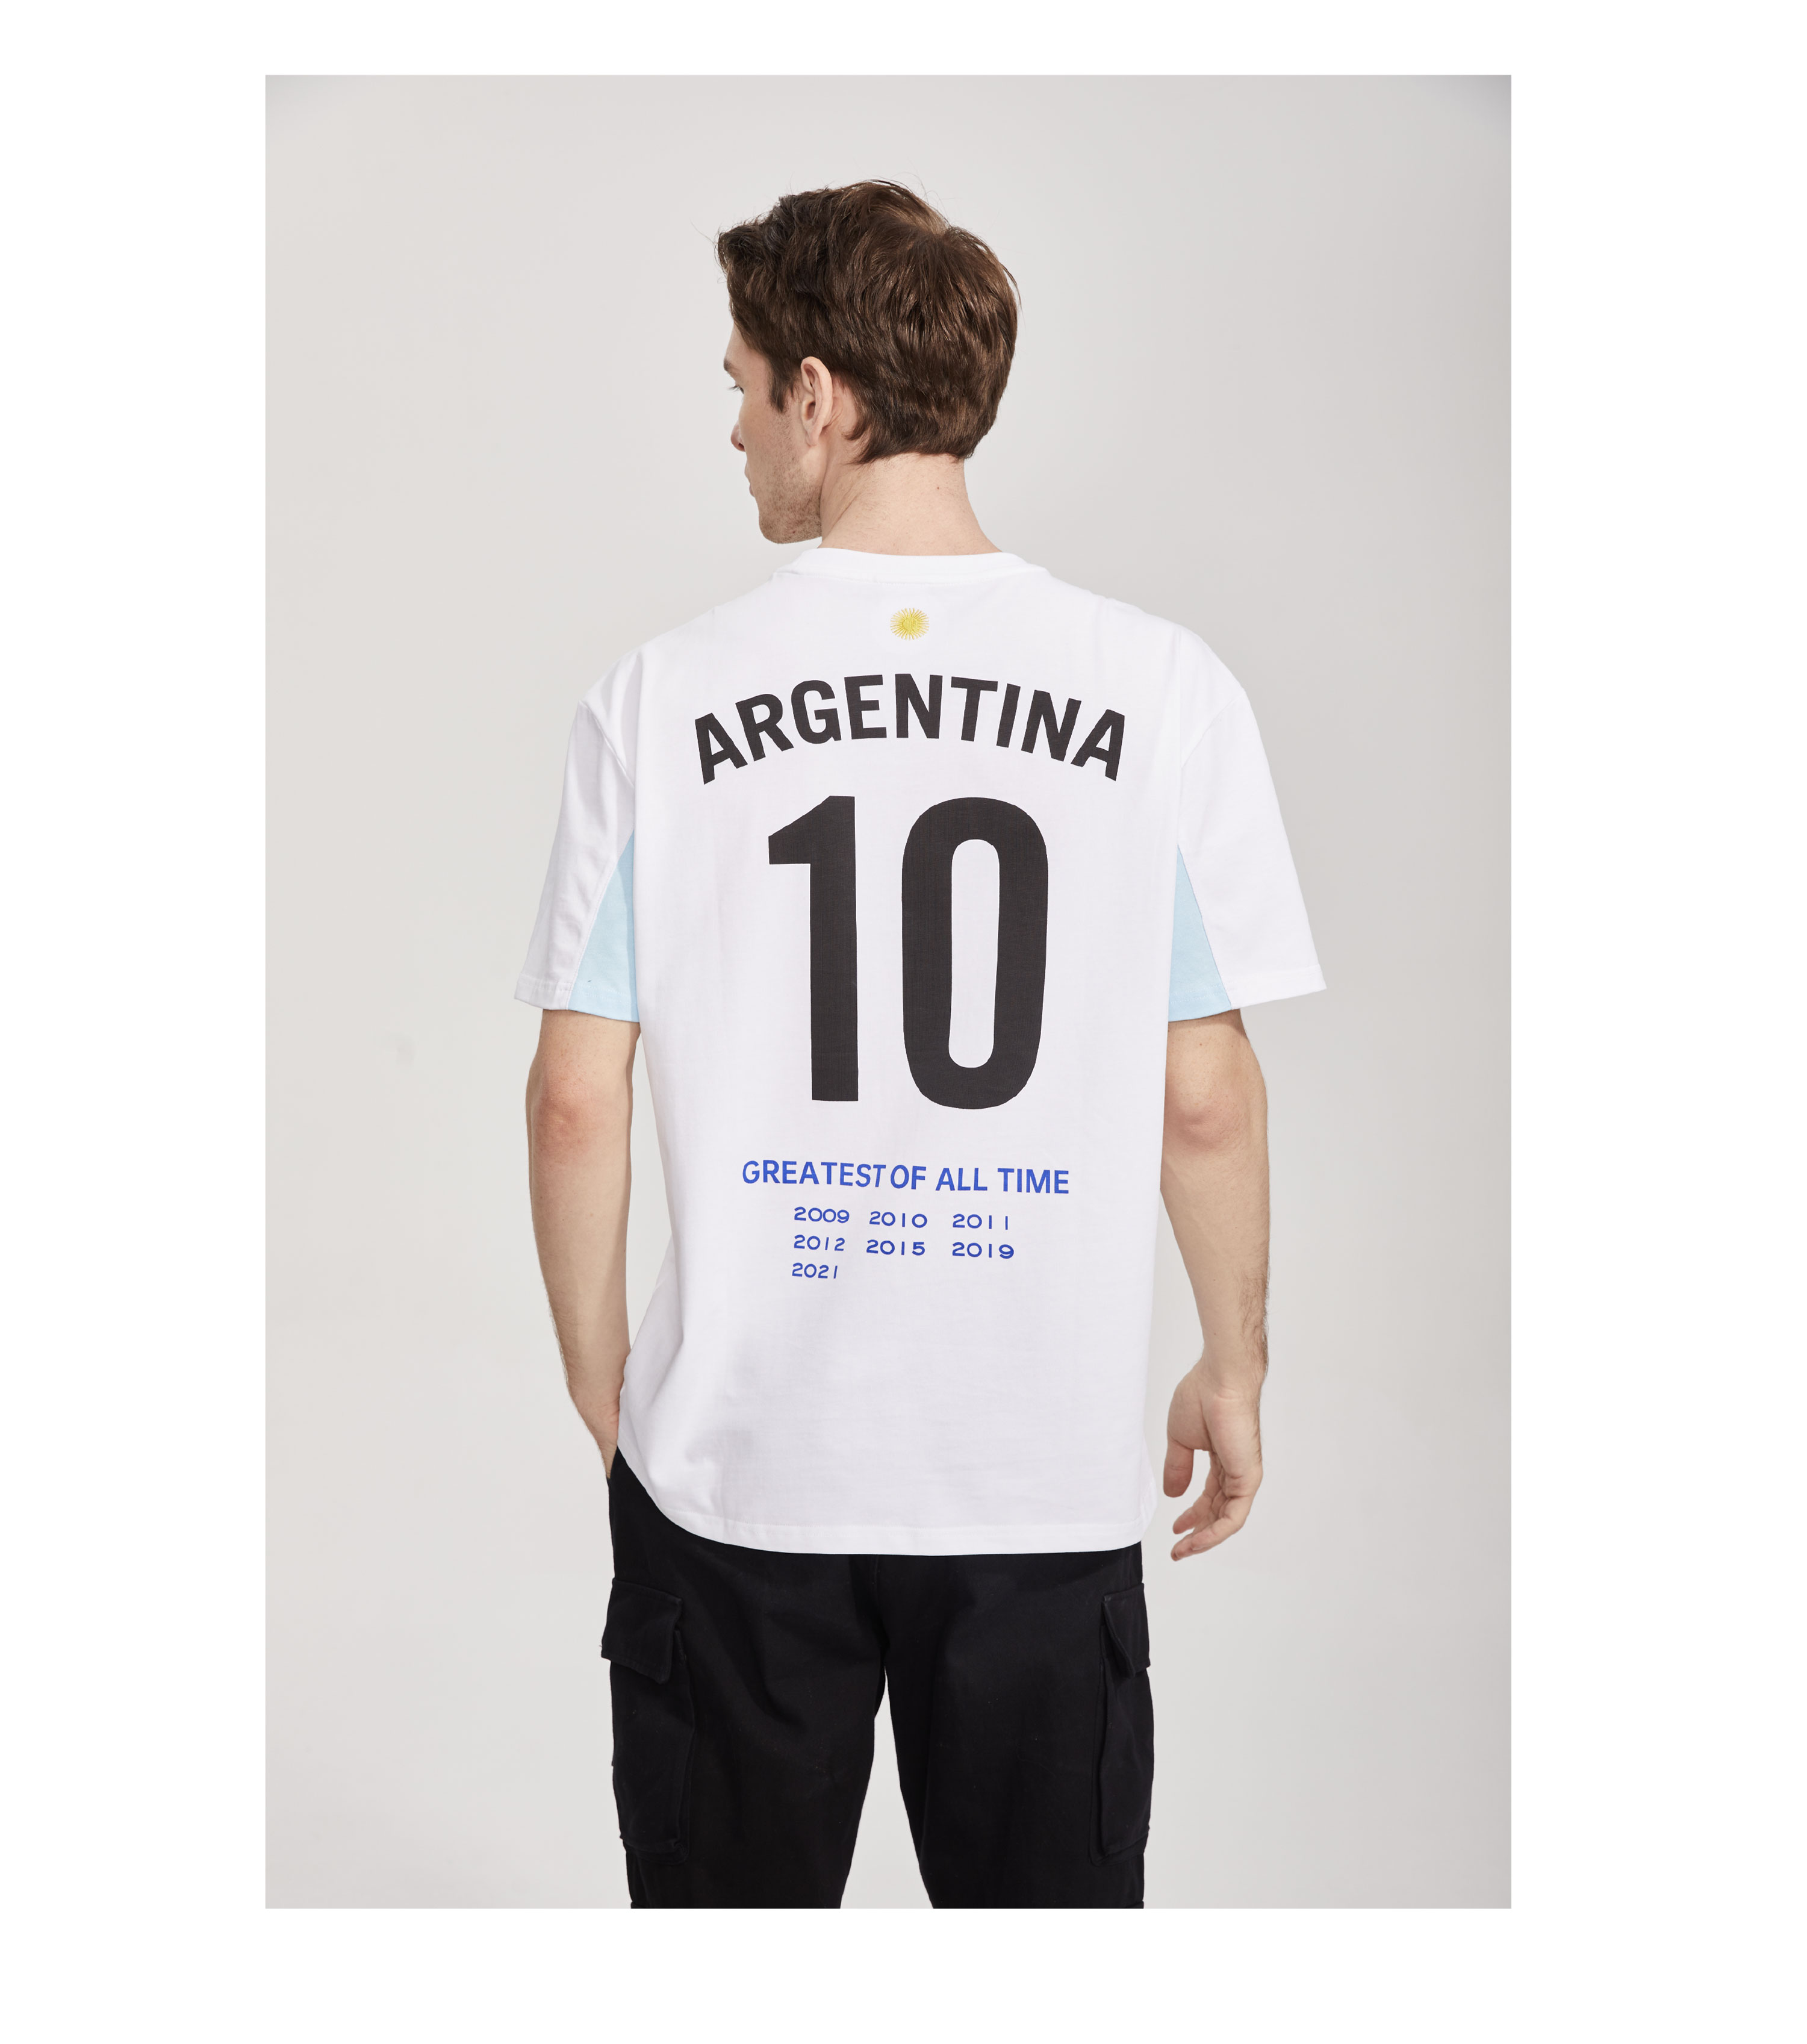 Argentina National Team AFA Messi Golden Ball Award Ballon d'Or commemorative T-shirt